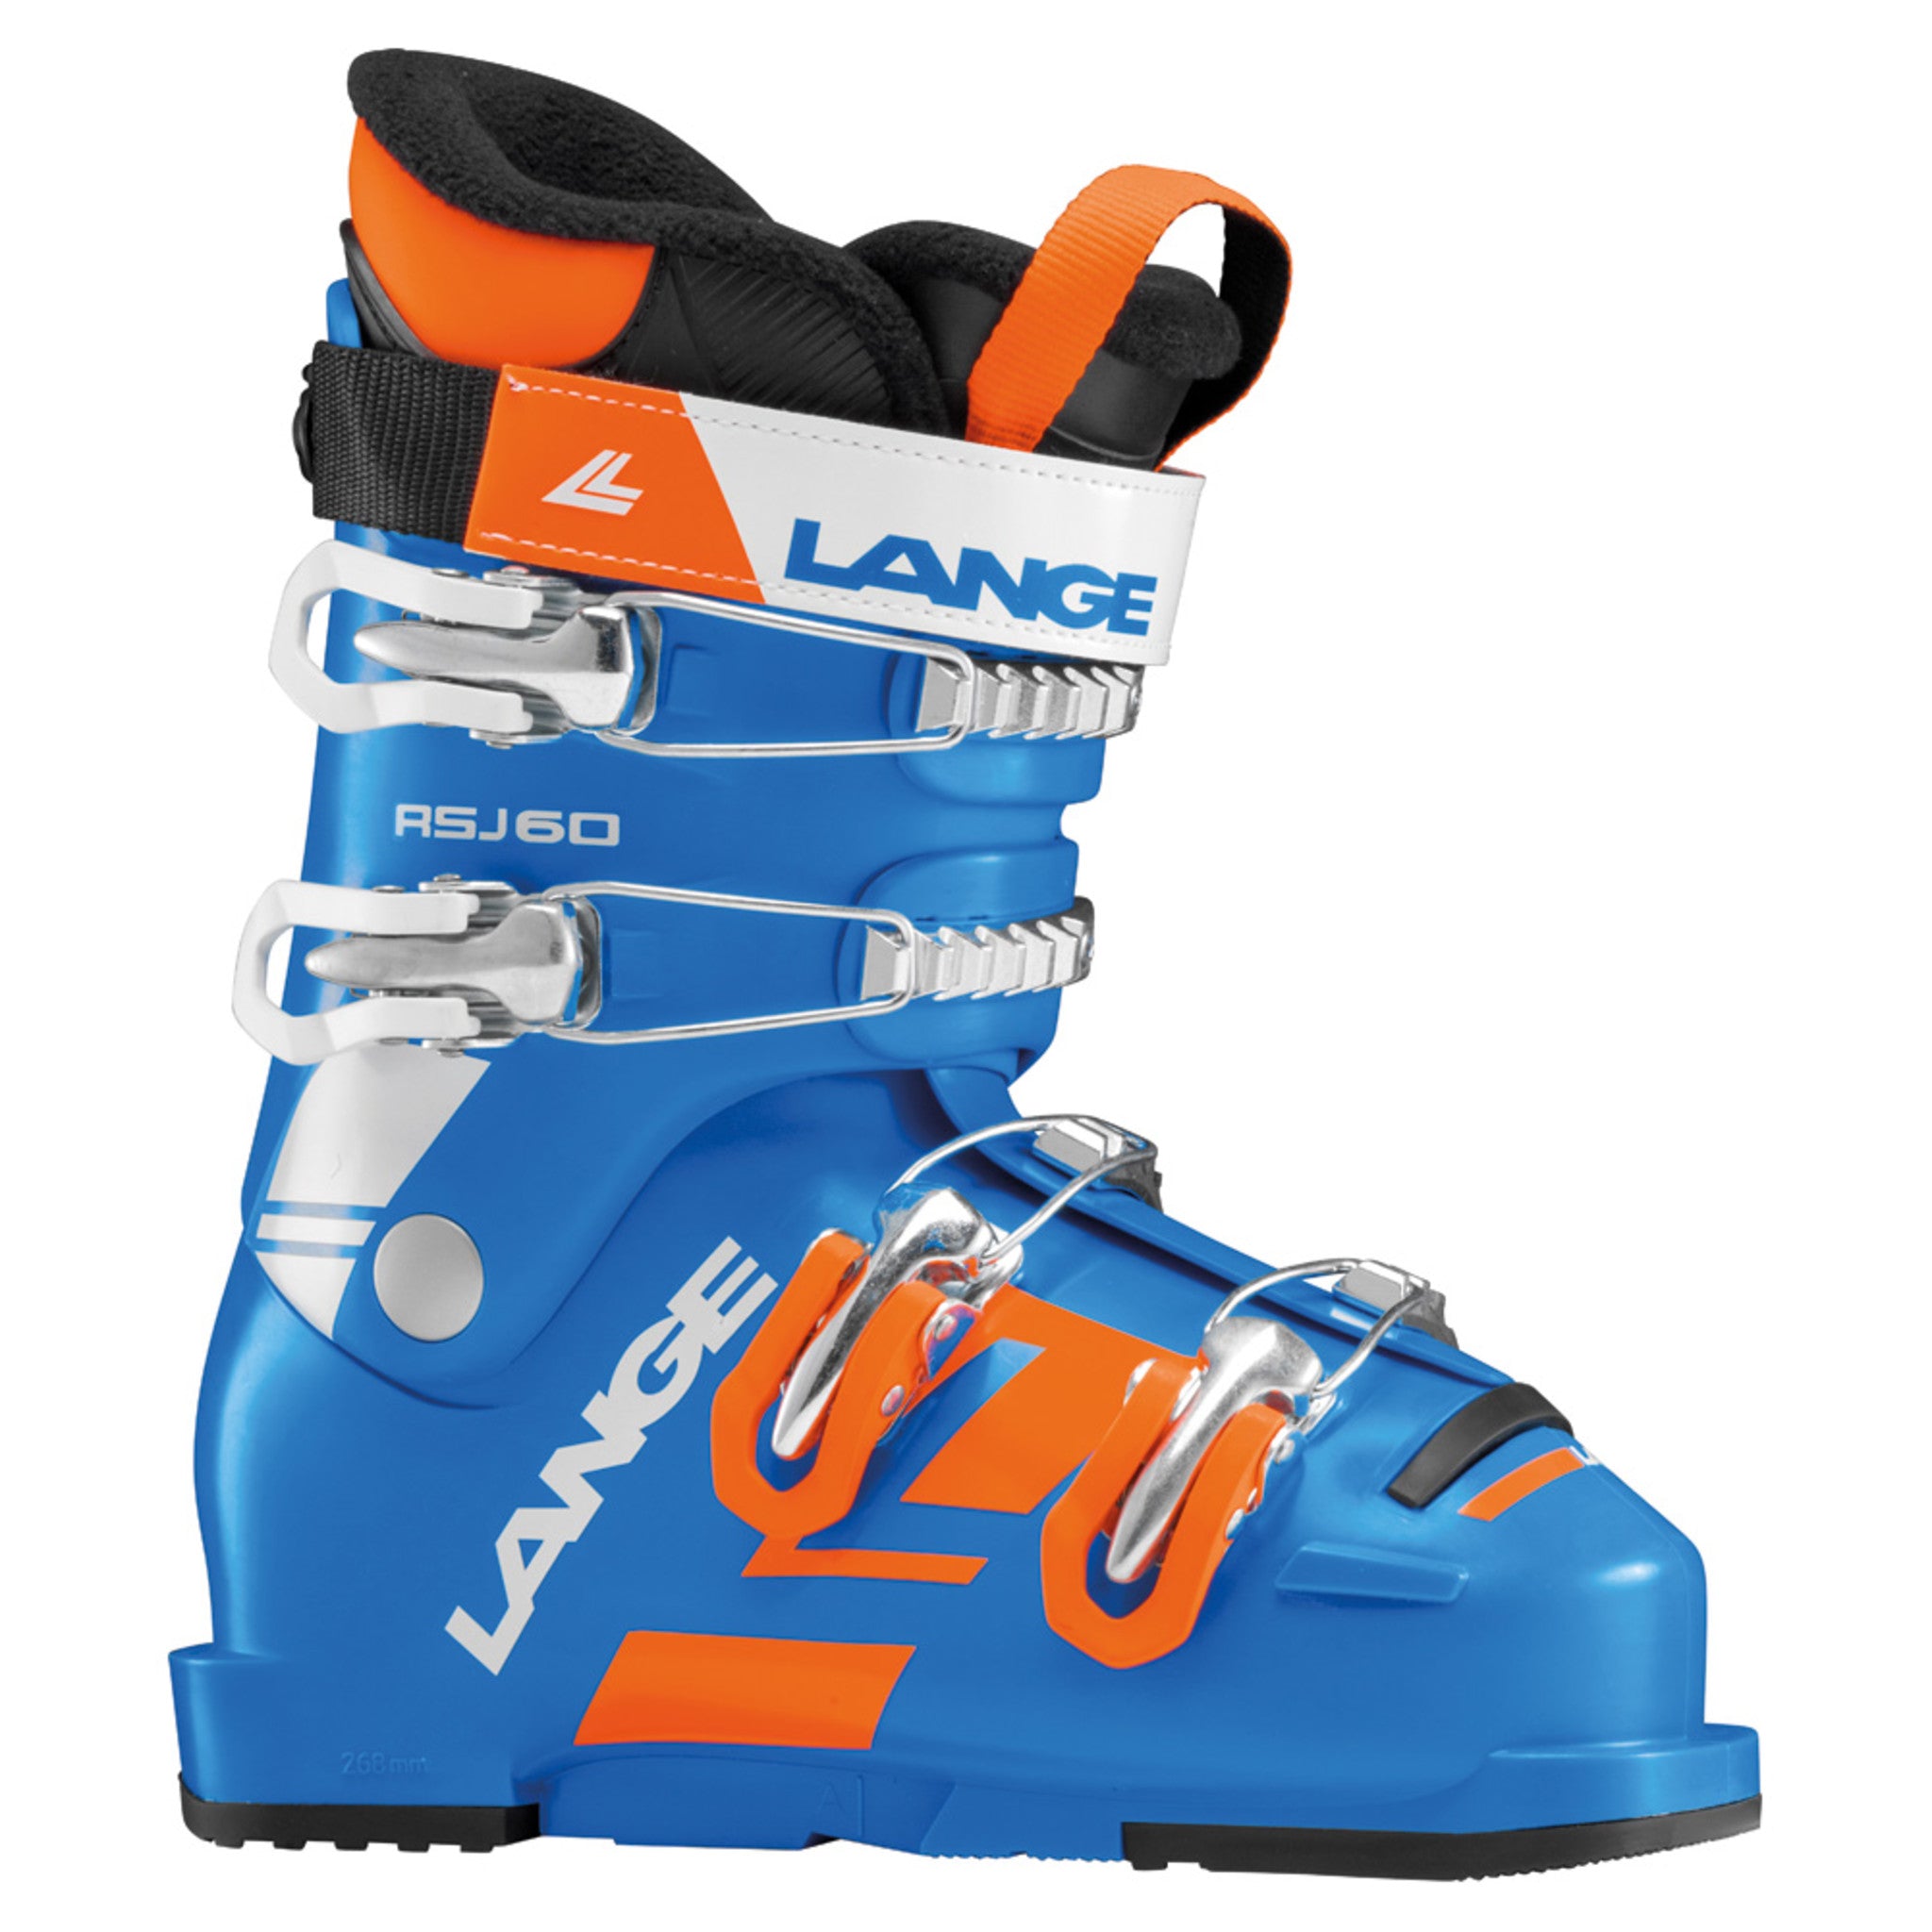 LANGE RSJ60   kids ski boots   size 23.5